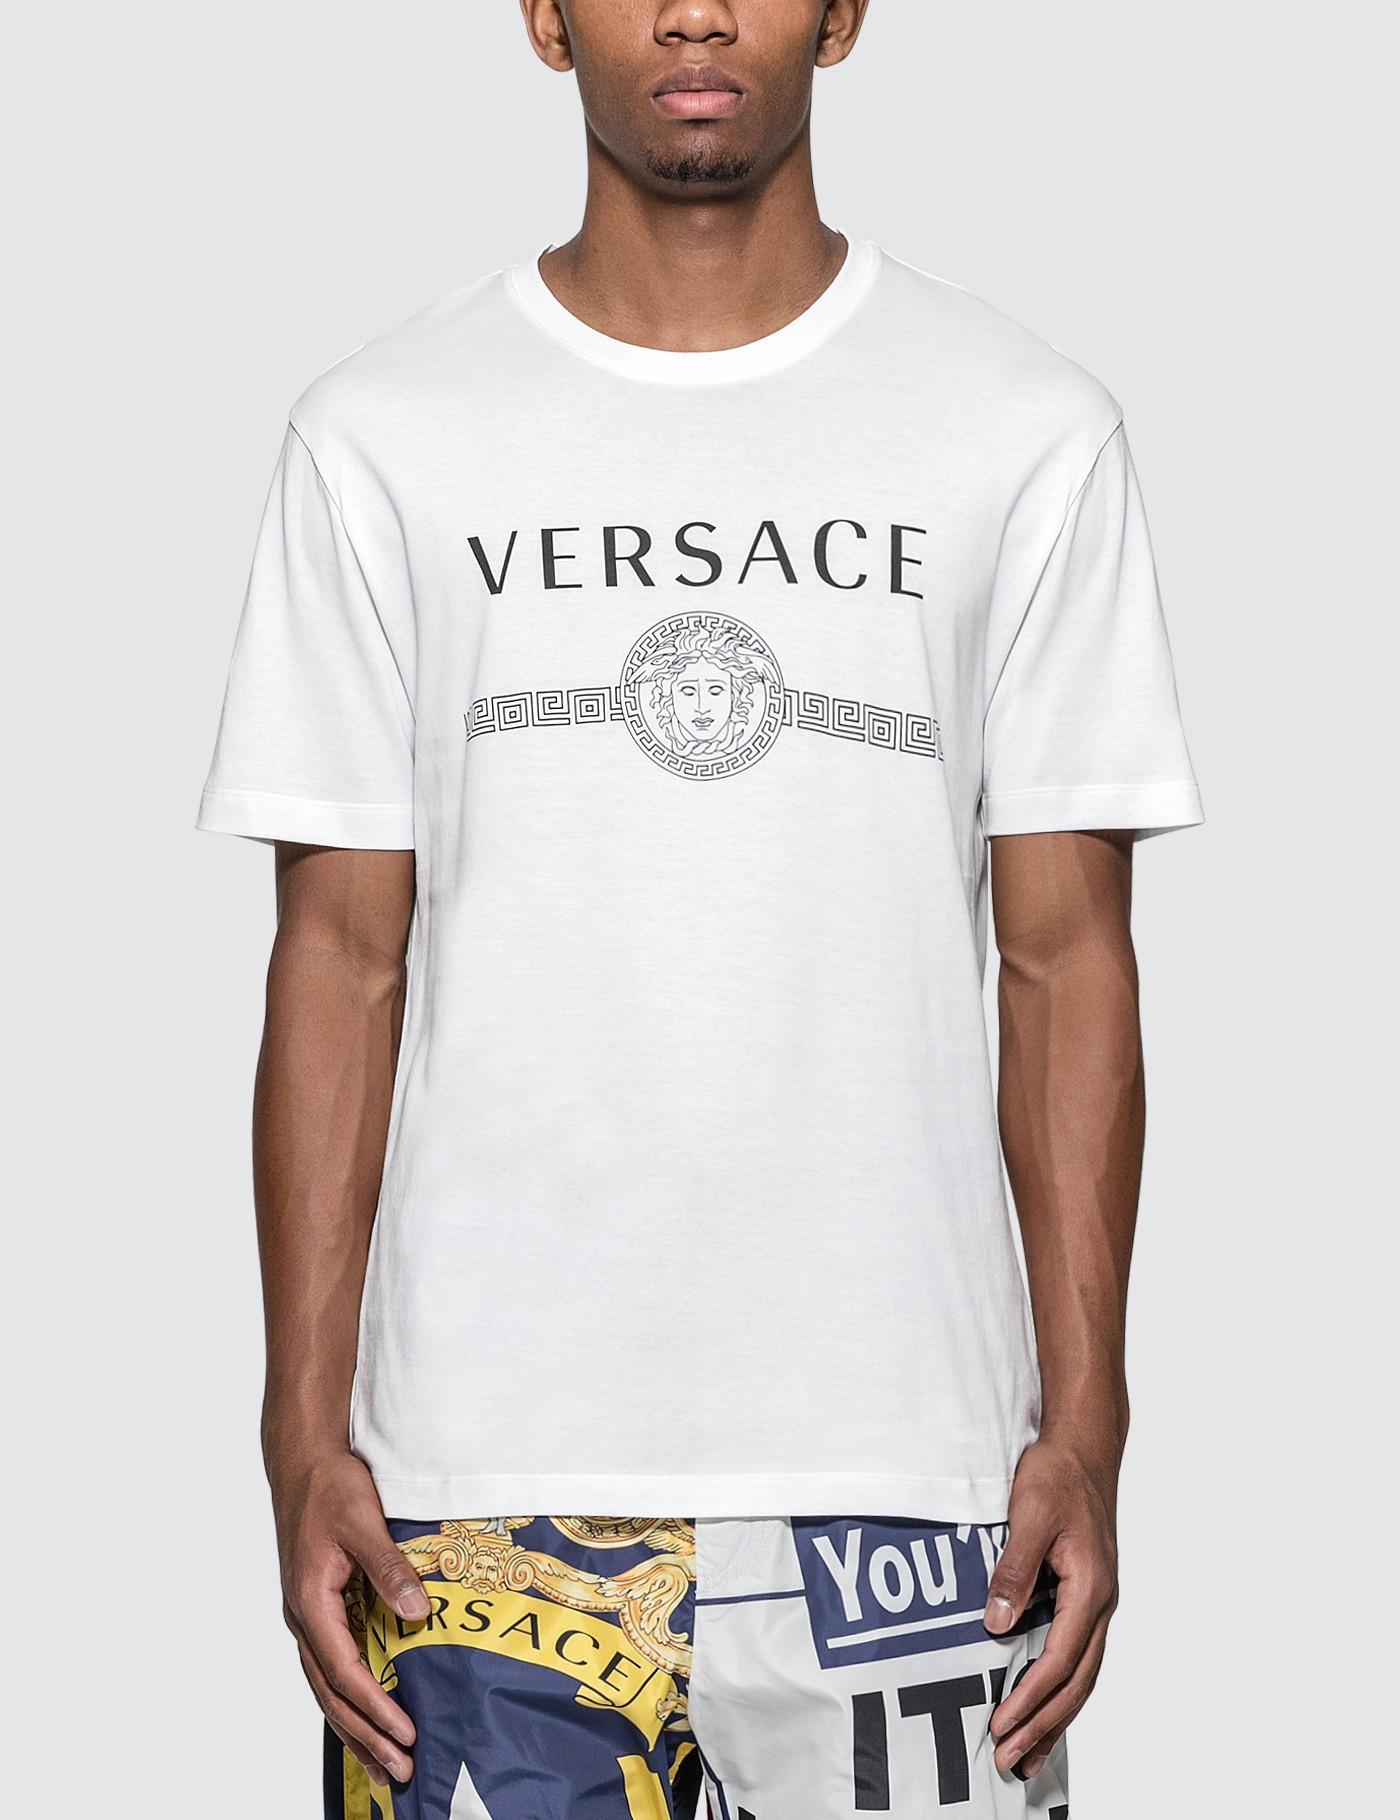 Versace Cotton Vintage Logo T-shirt in White for Men - Lyst